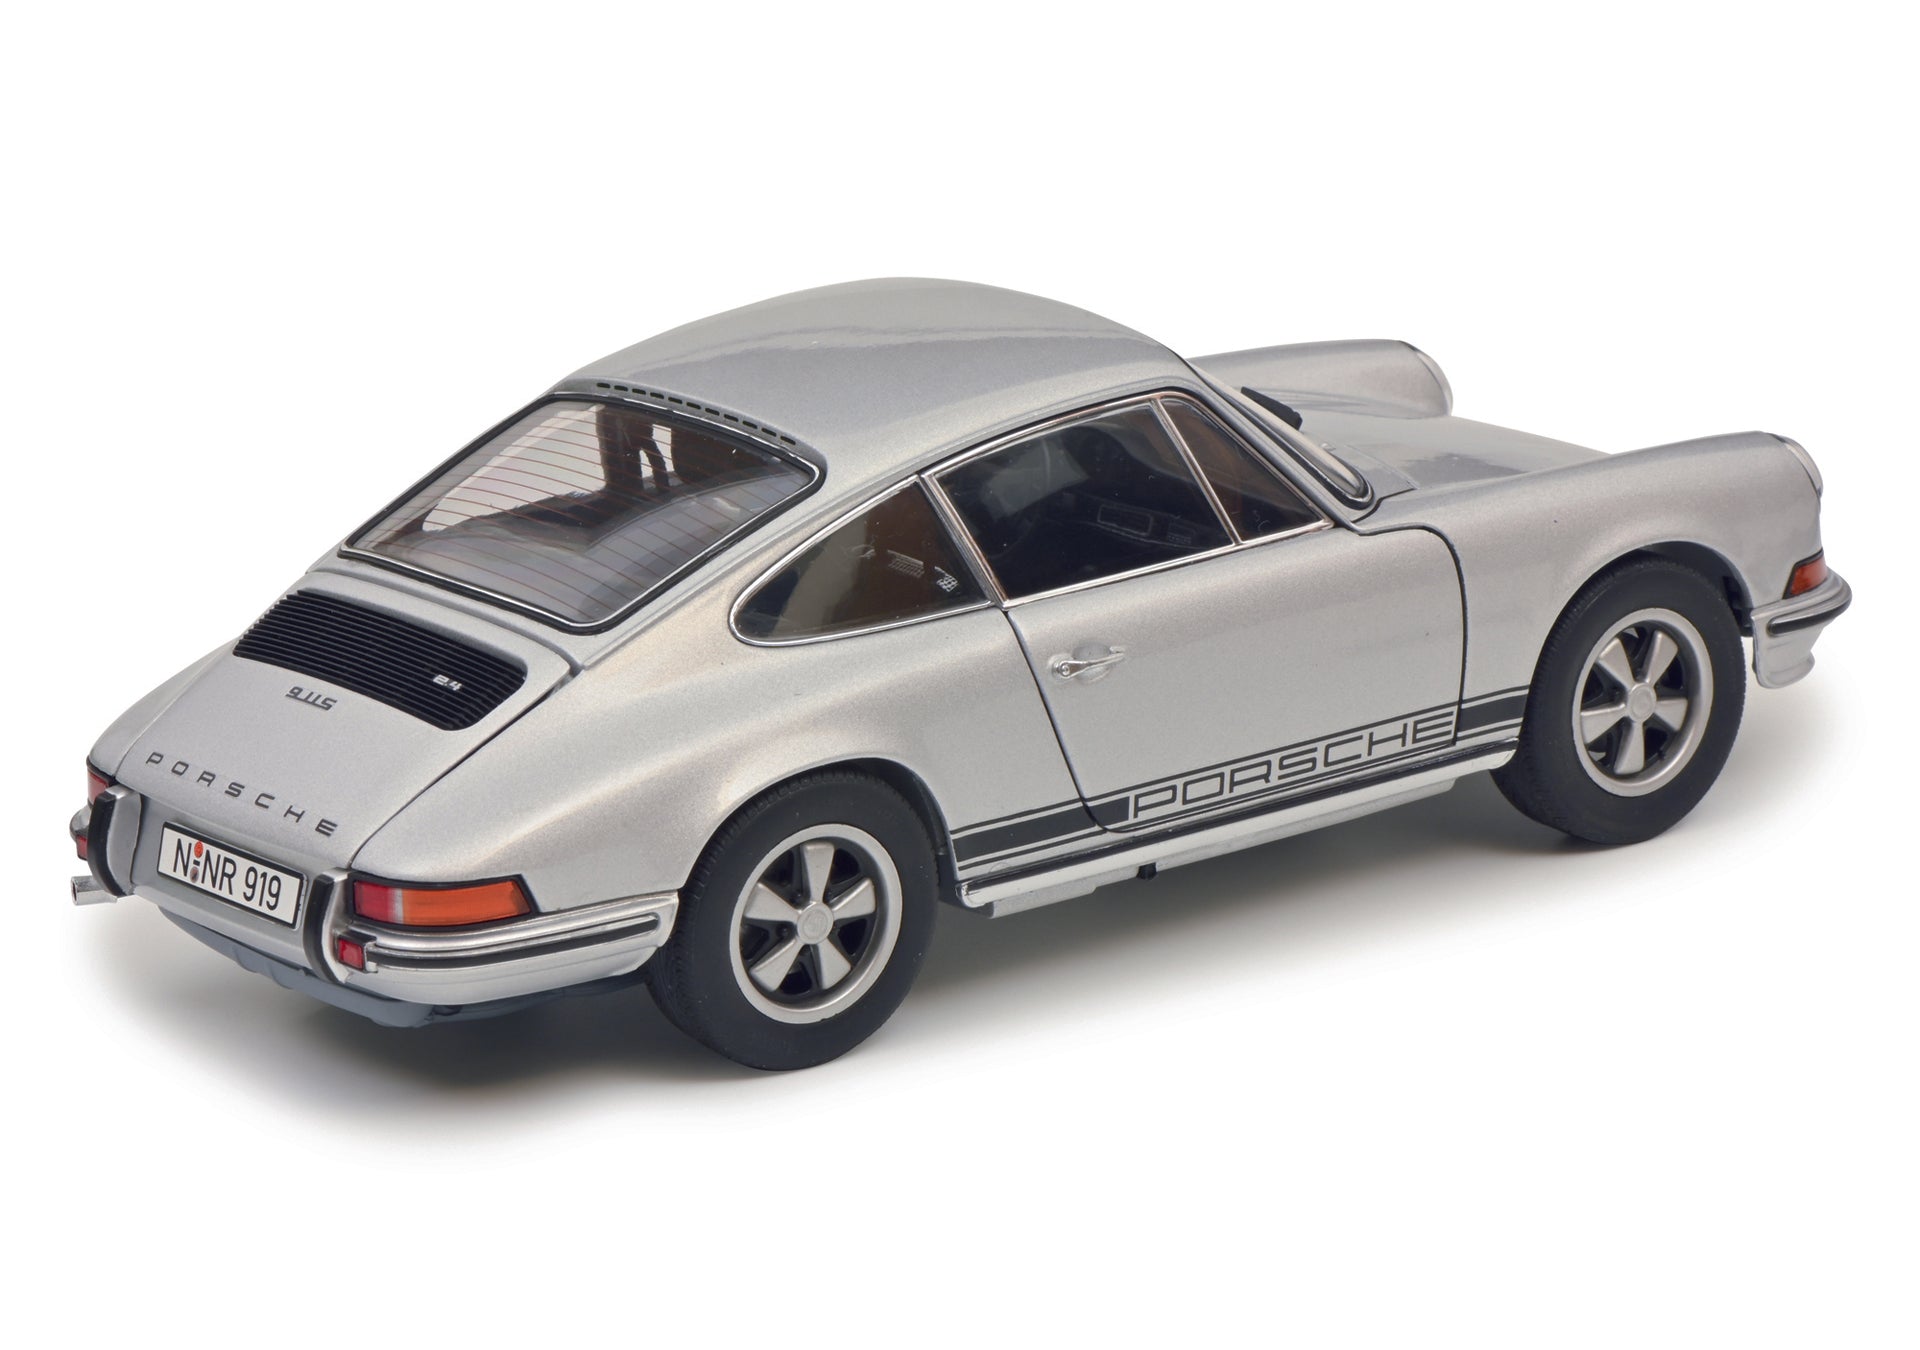 Schuco 450047000 - Porsche 911S Coupé silver1:18 EAN: 4007864058679, at Ajckids.com, authorized Schuco dealer for the USA.